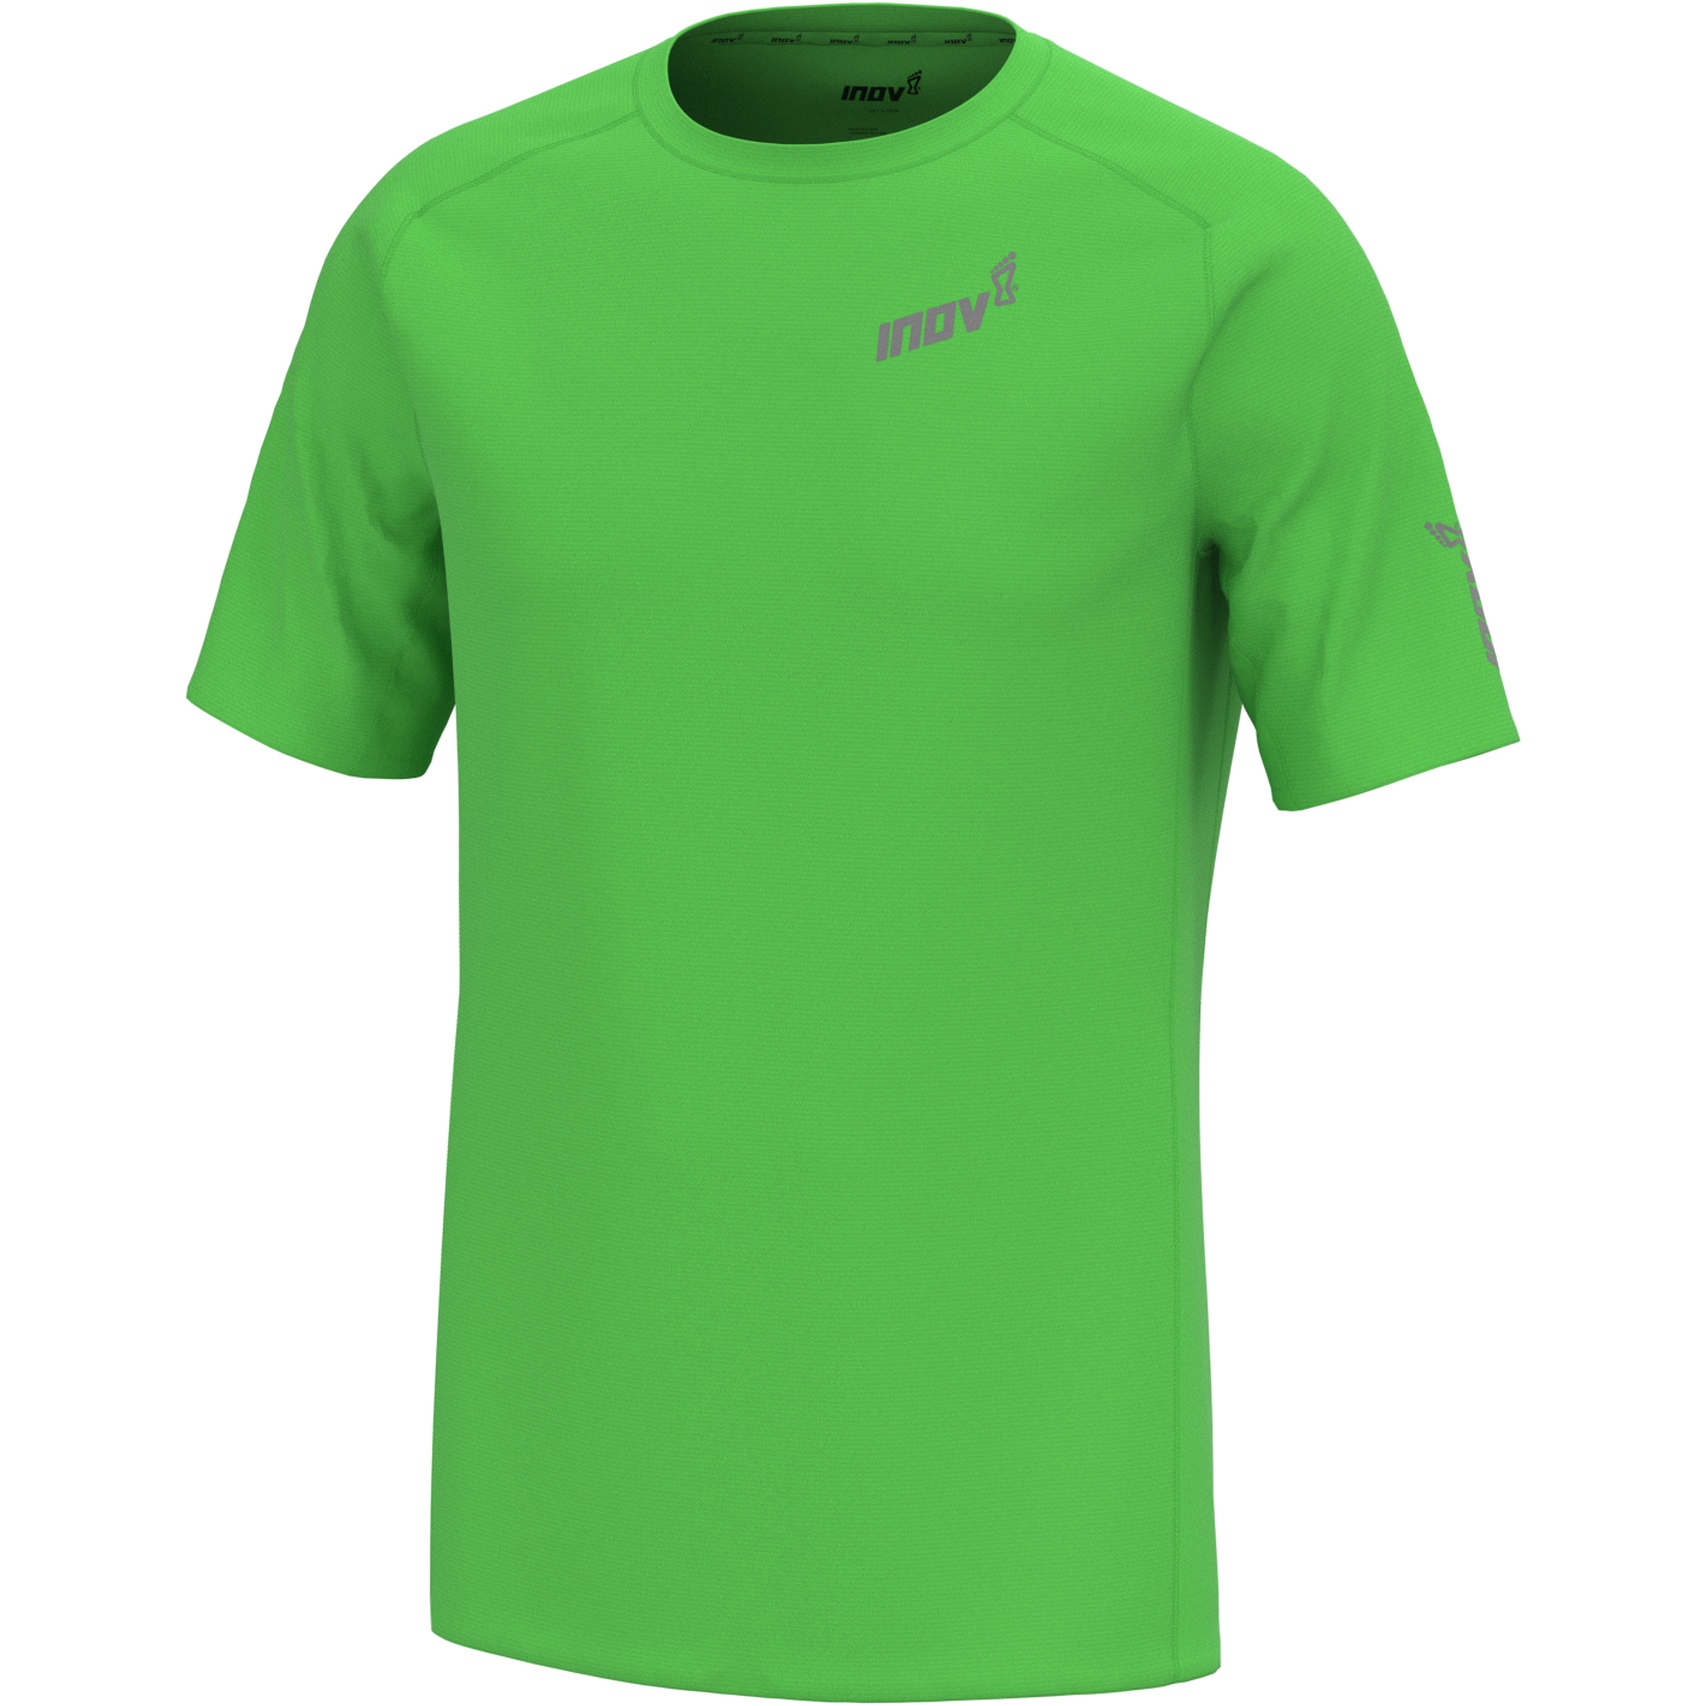 Image of Inov-8 Base Elite Short Sleeve Running Shirt - green